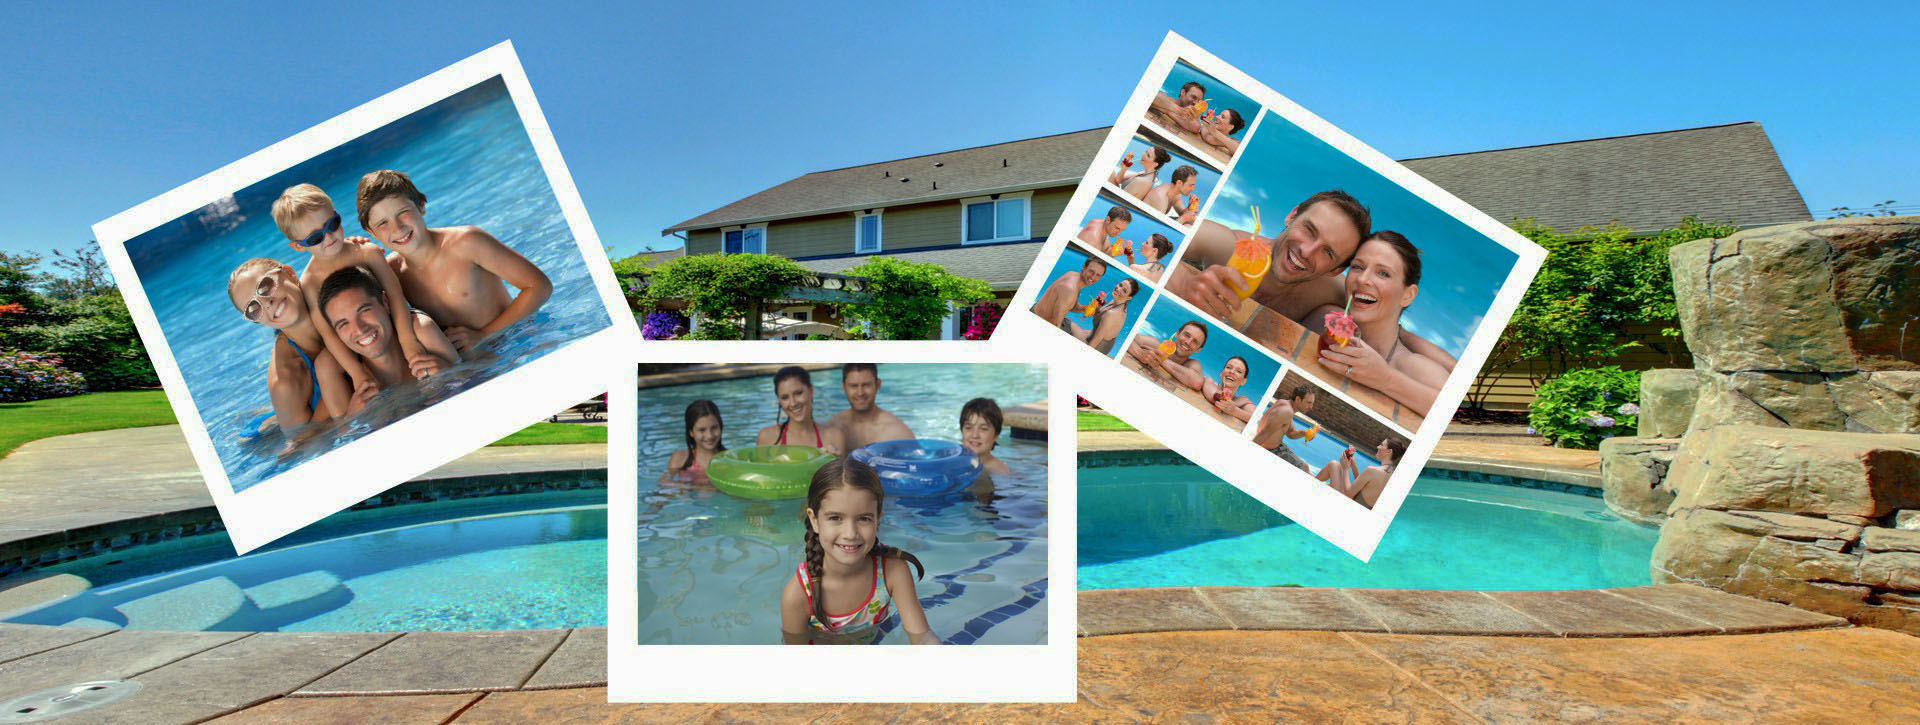 family having fun in swimming pool Visalia